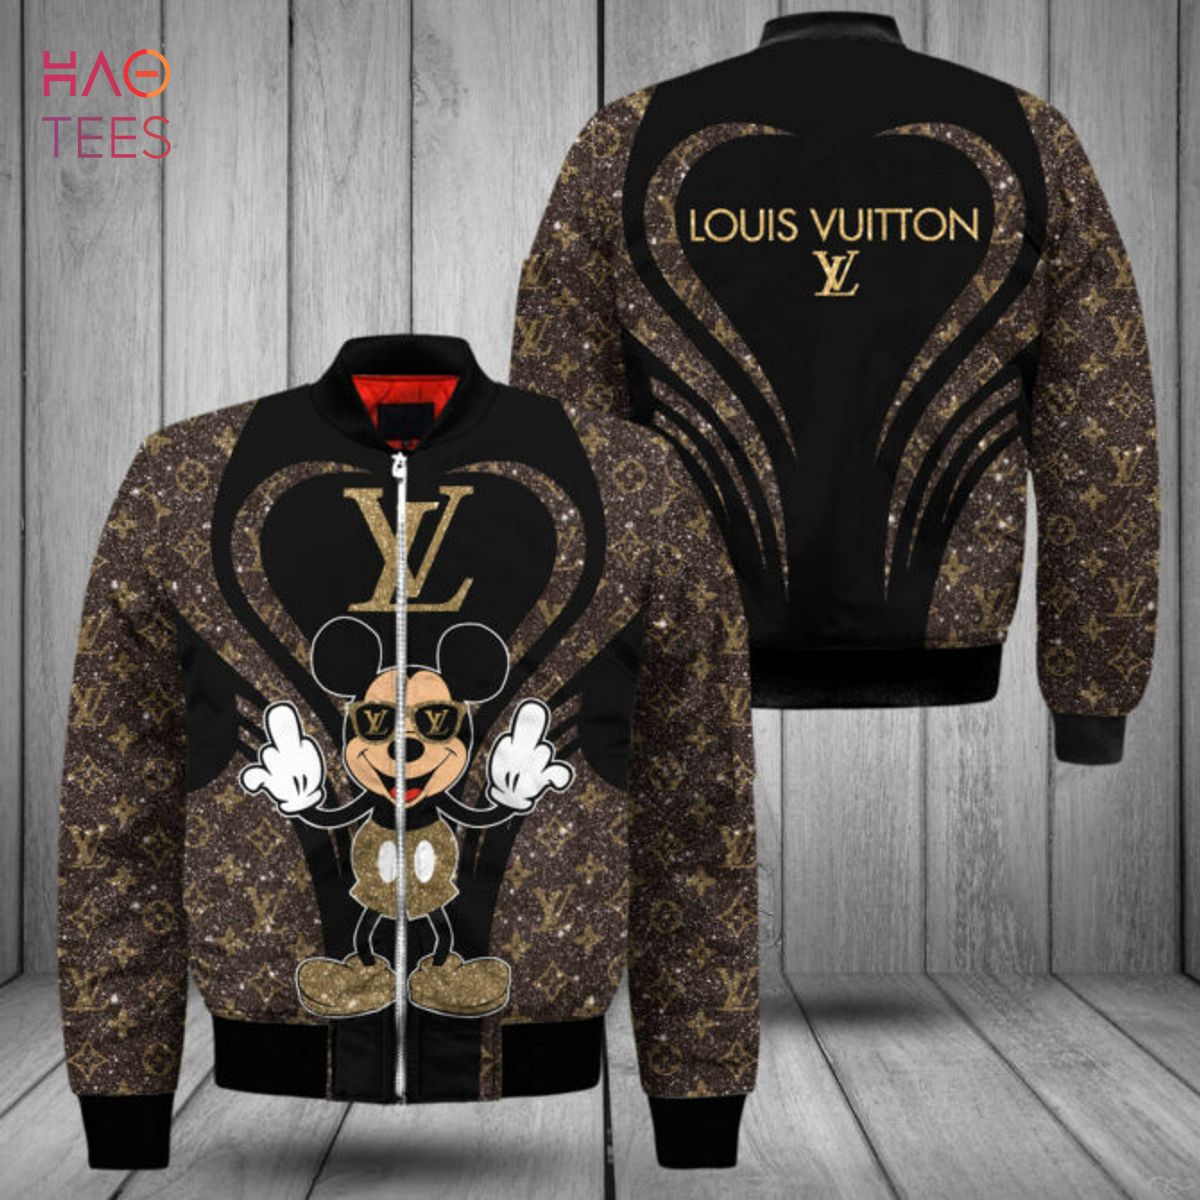 BEST Louis Vuitton Luxury Brand Mickey 3D Hoodie Limited Edition